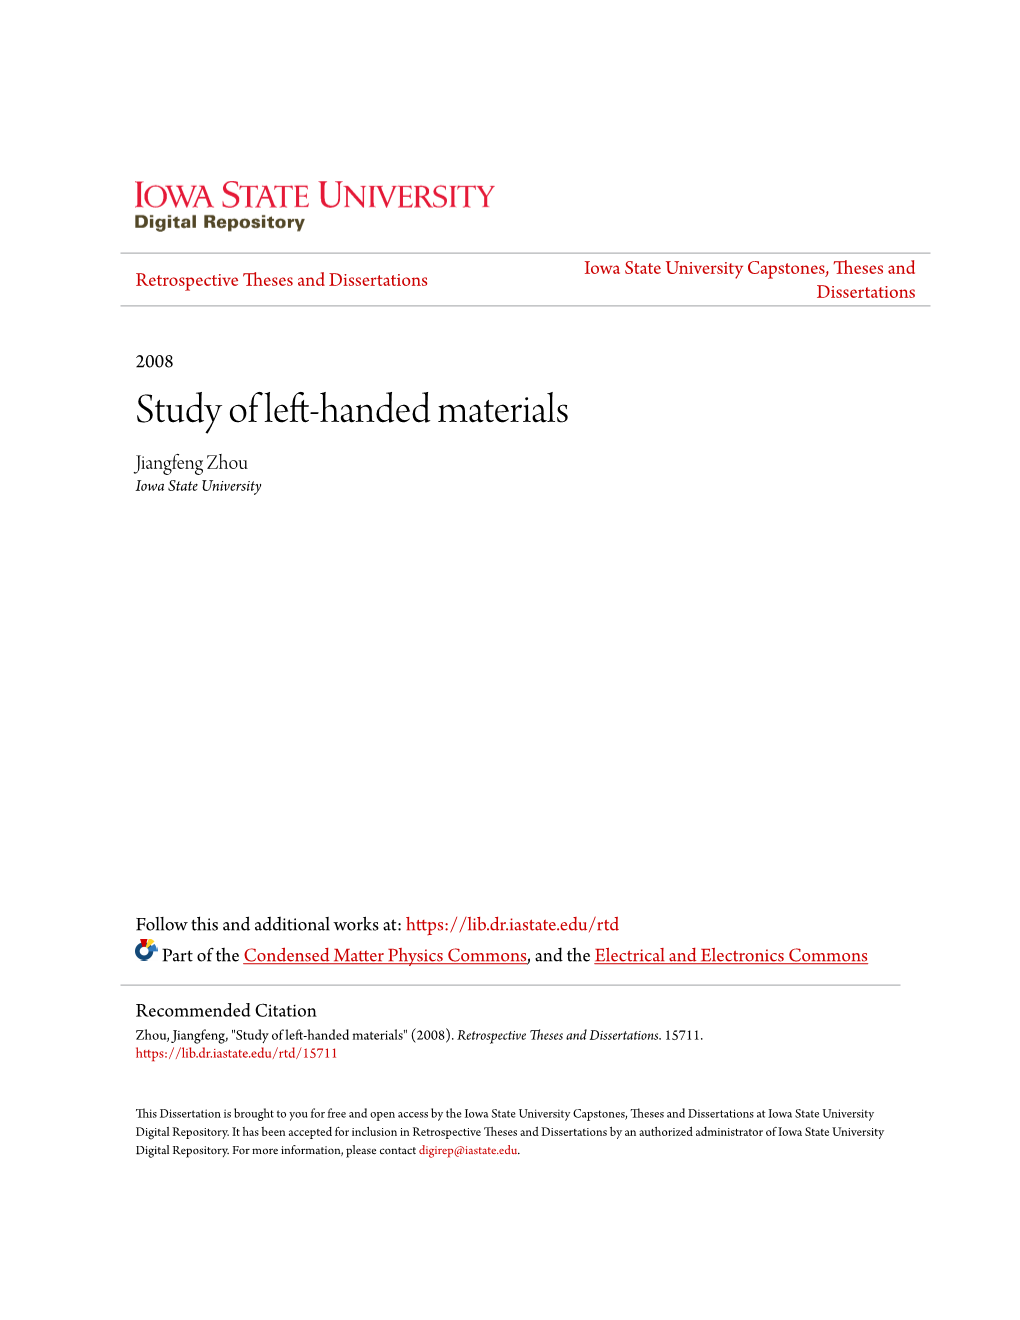 Study of Left-Handed Materials Jiangfeng Zhou Iowa State University